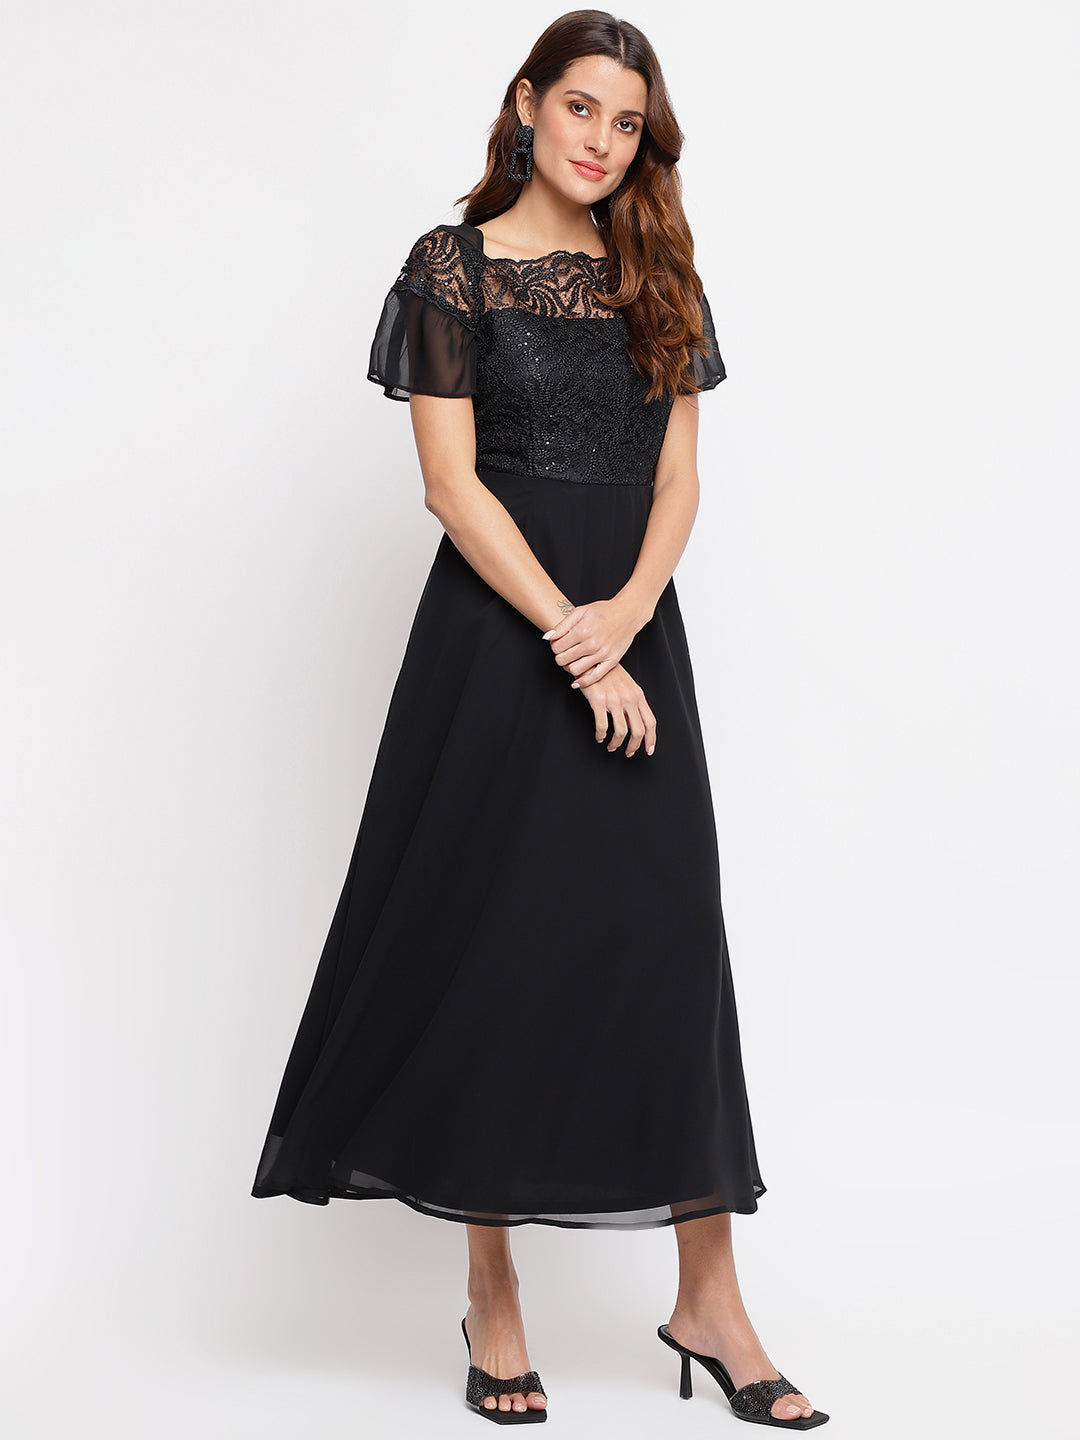 Black Cap Sleeve Embellished Maxi Dress